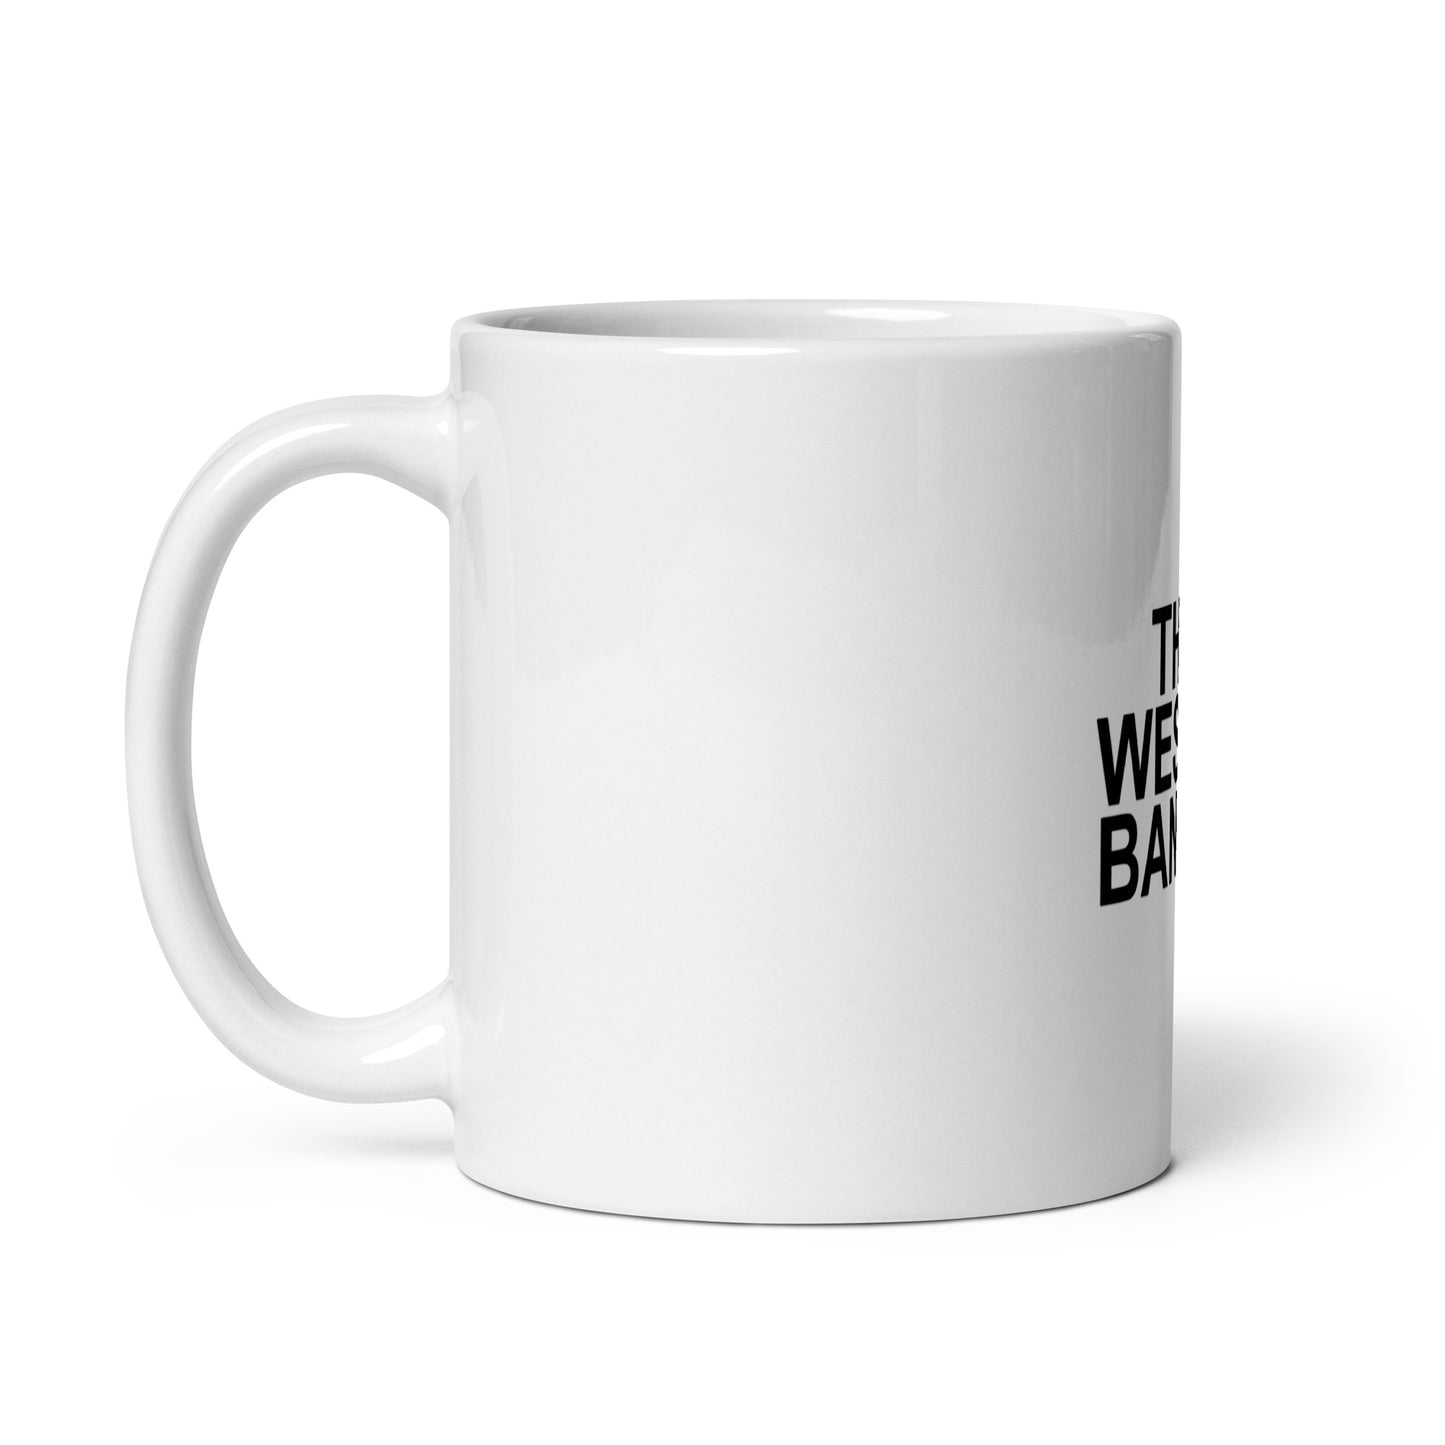 The West Bank Mug